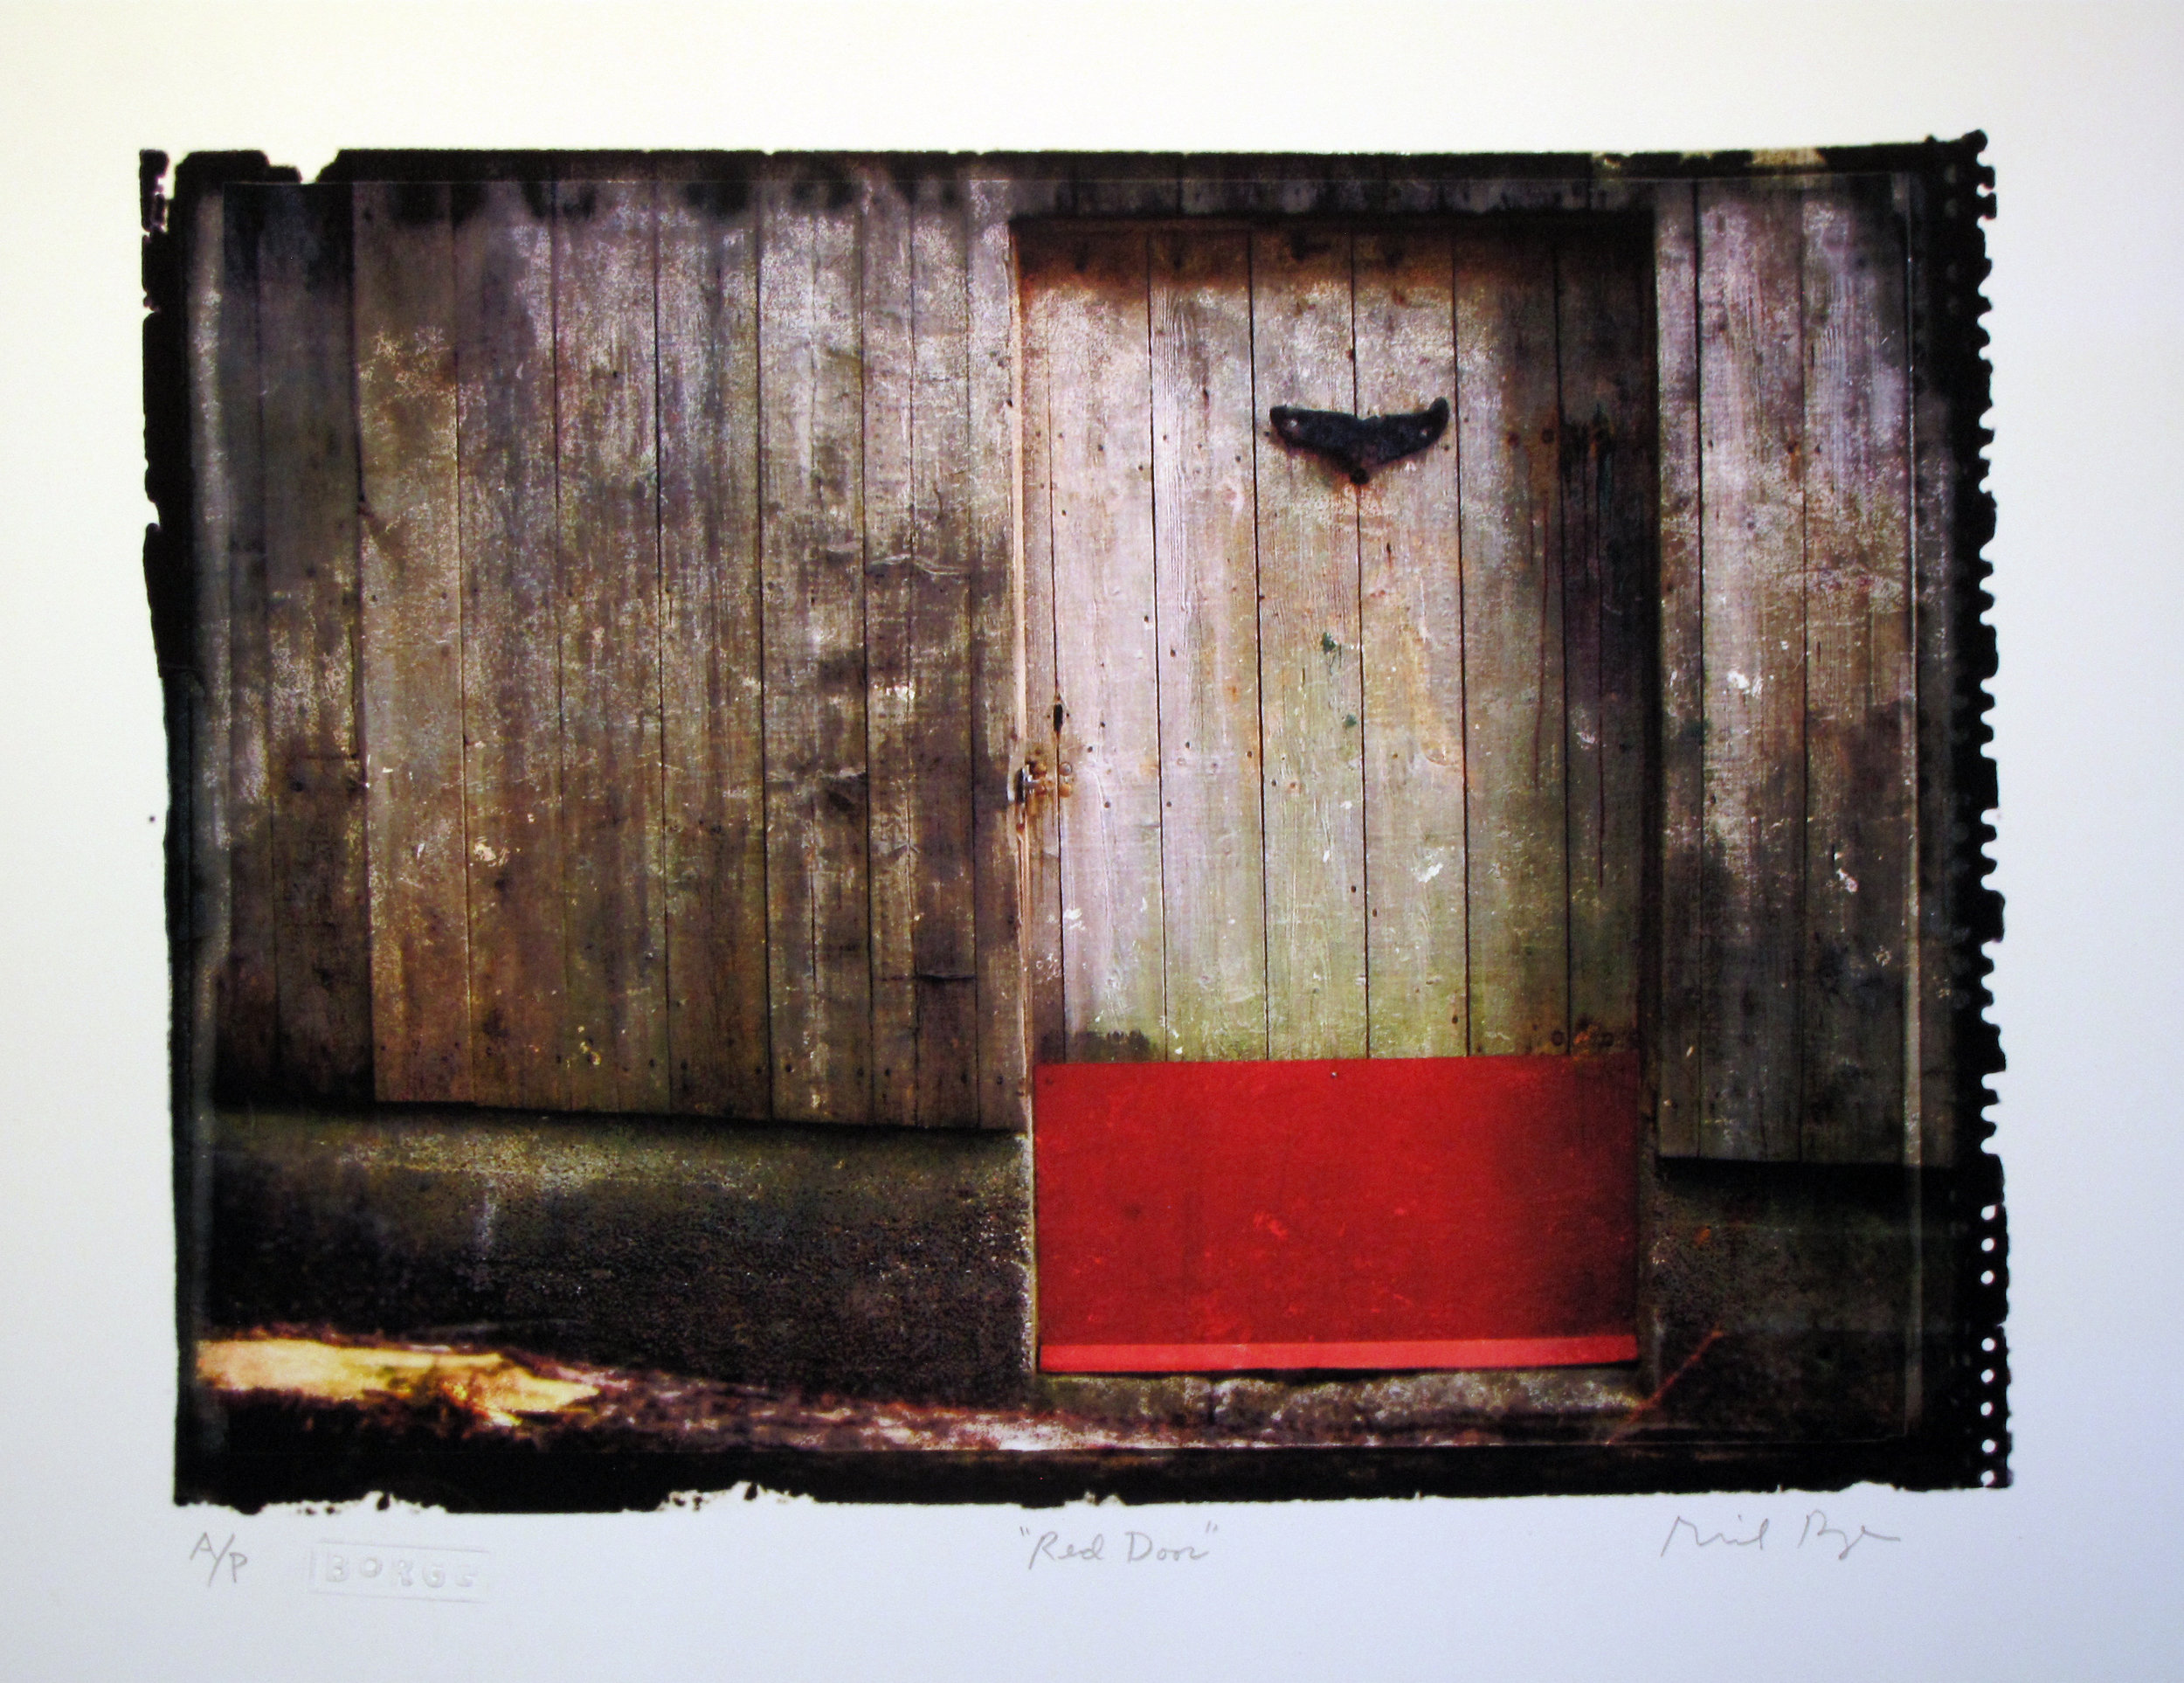 Borge_Richard_01_Red Door_Print_10 x 13 in_Framed.jpg